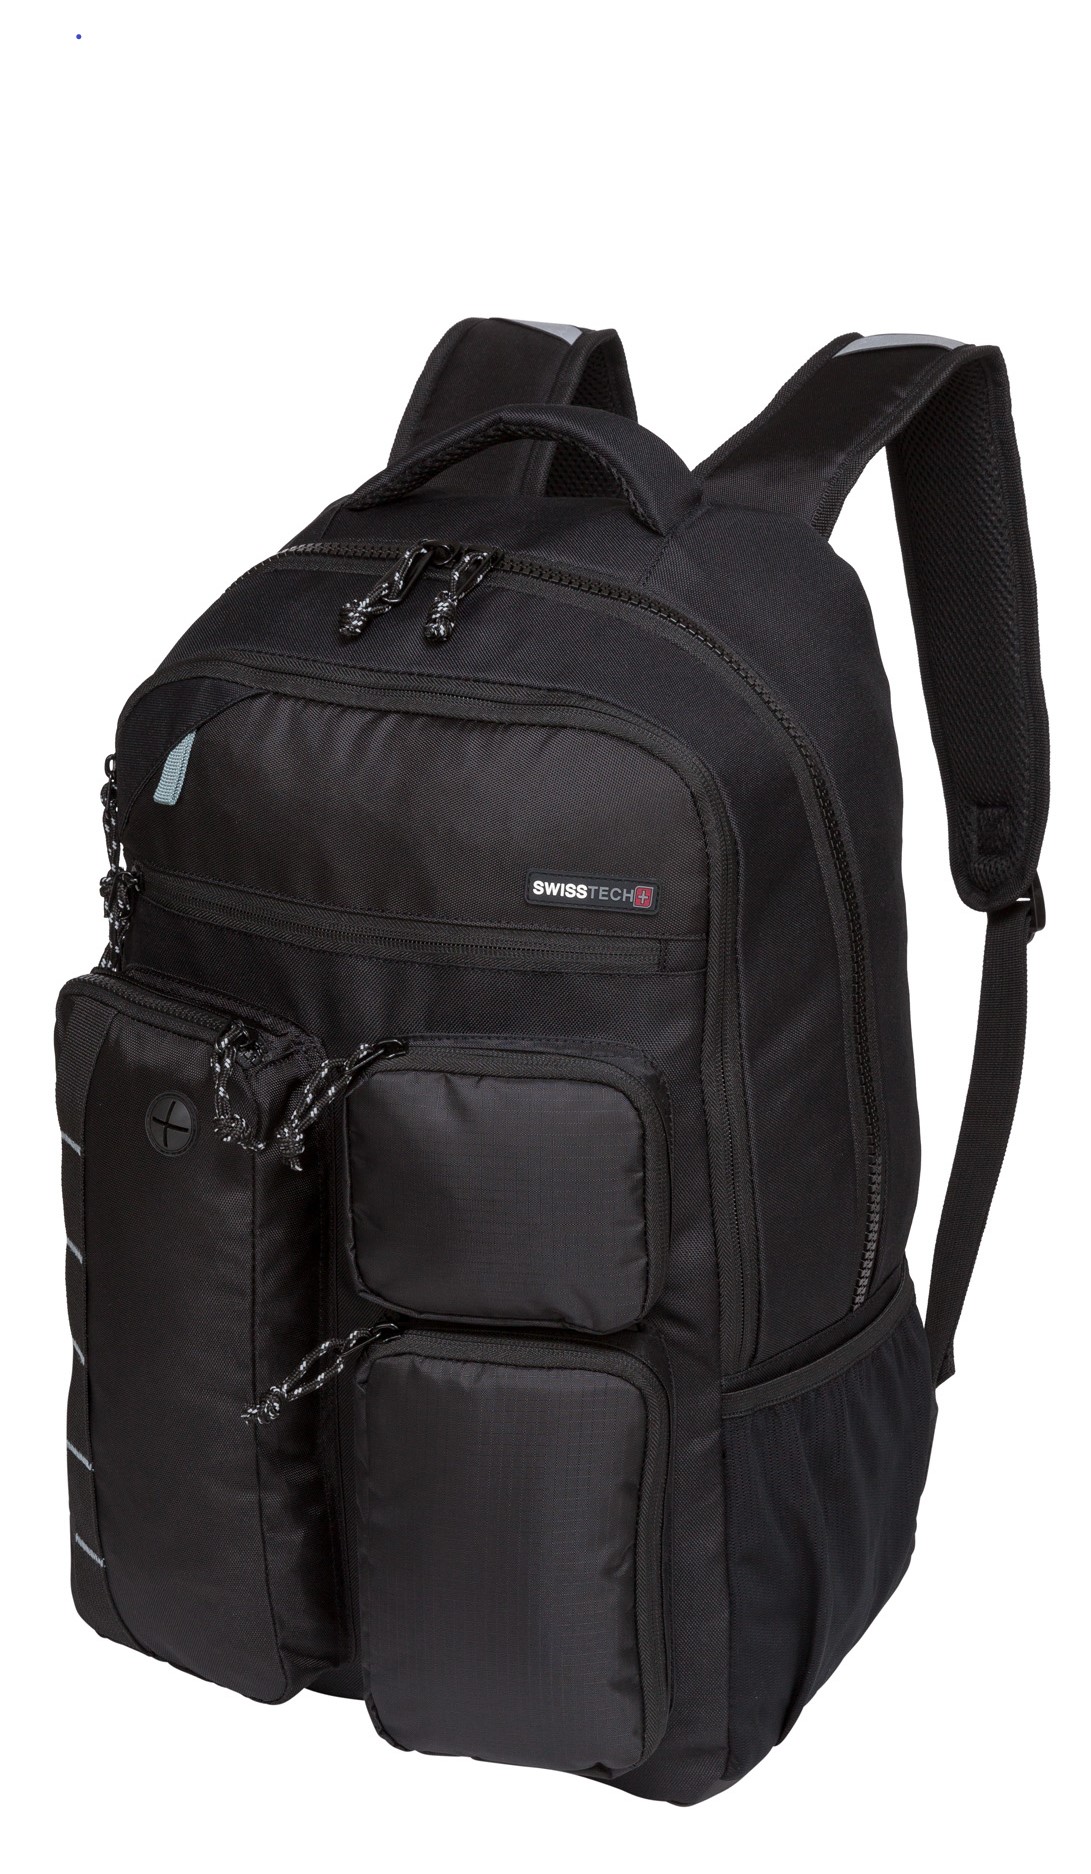 SwissTech Lucerne 34.4 L School Backpack Laptop Tablet Sleeve, Black, Unisex, Adult, Teen, Polyester - image 3 of 9